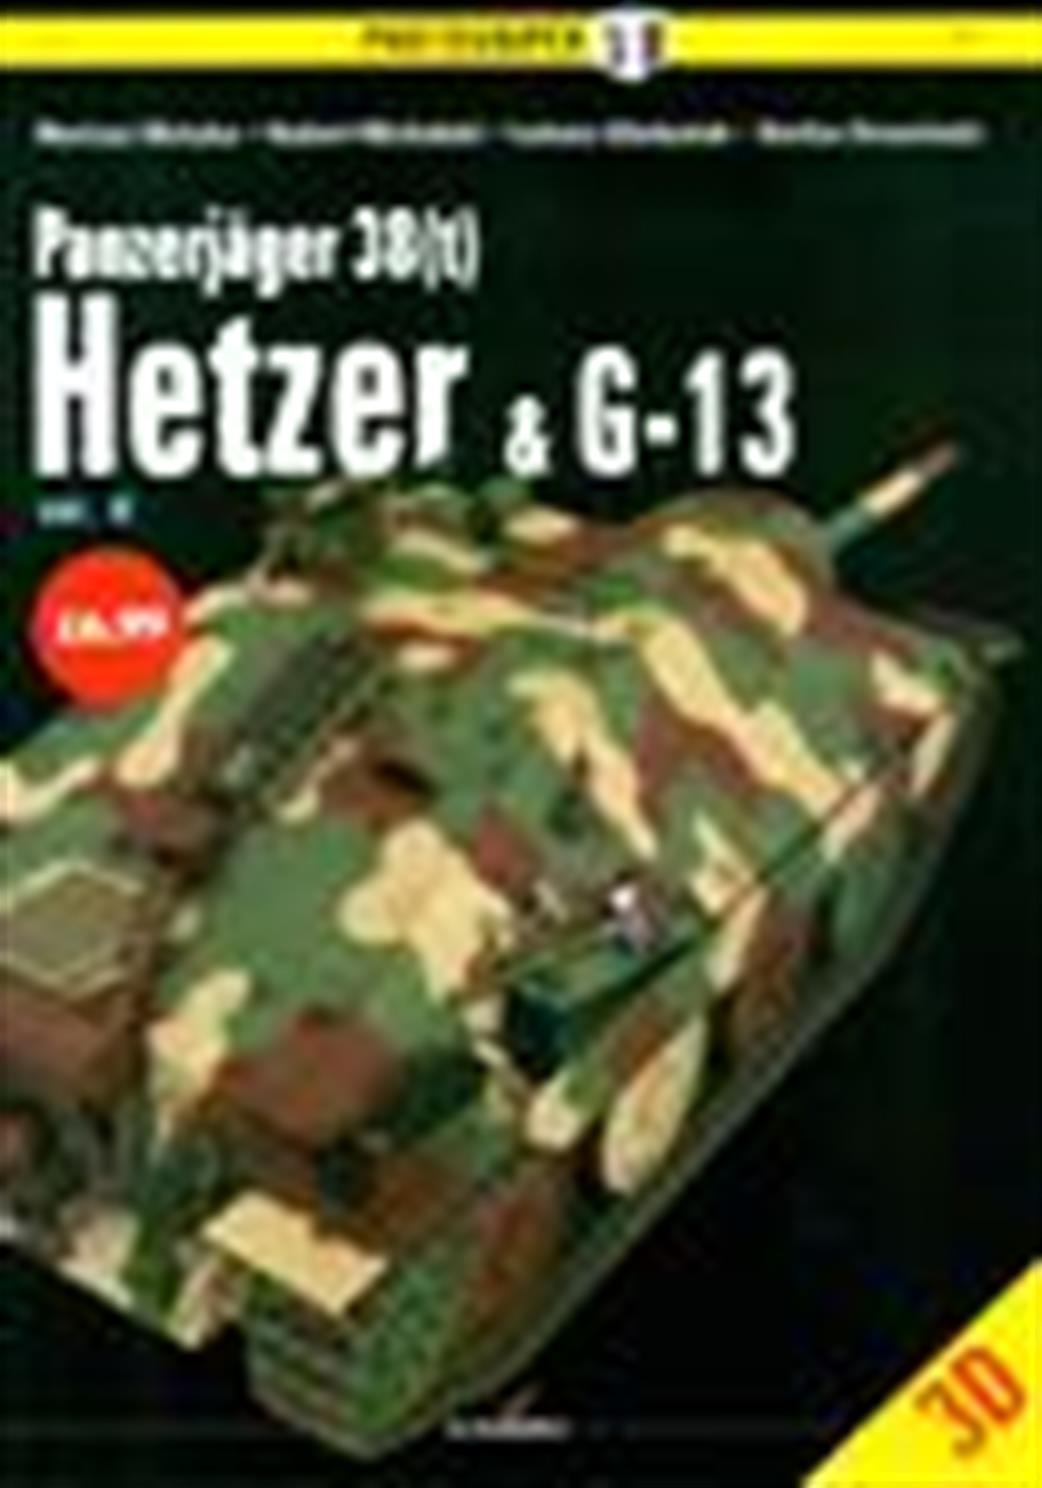 9788364596285 Panzerjager 38t. Hetzer & G-13 from the Photosniper Sniper